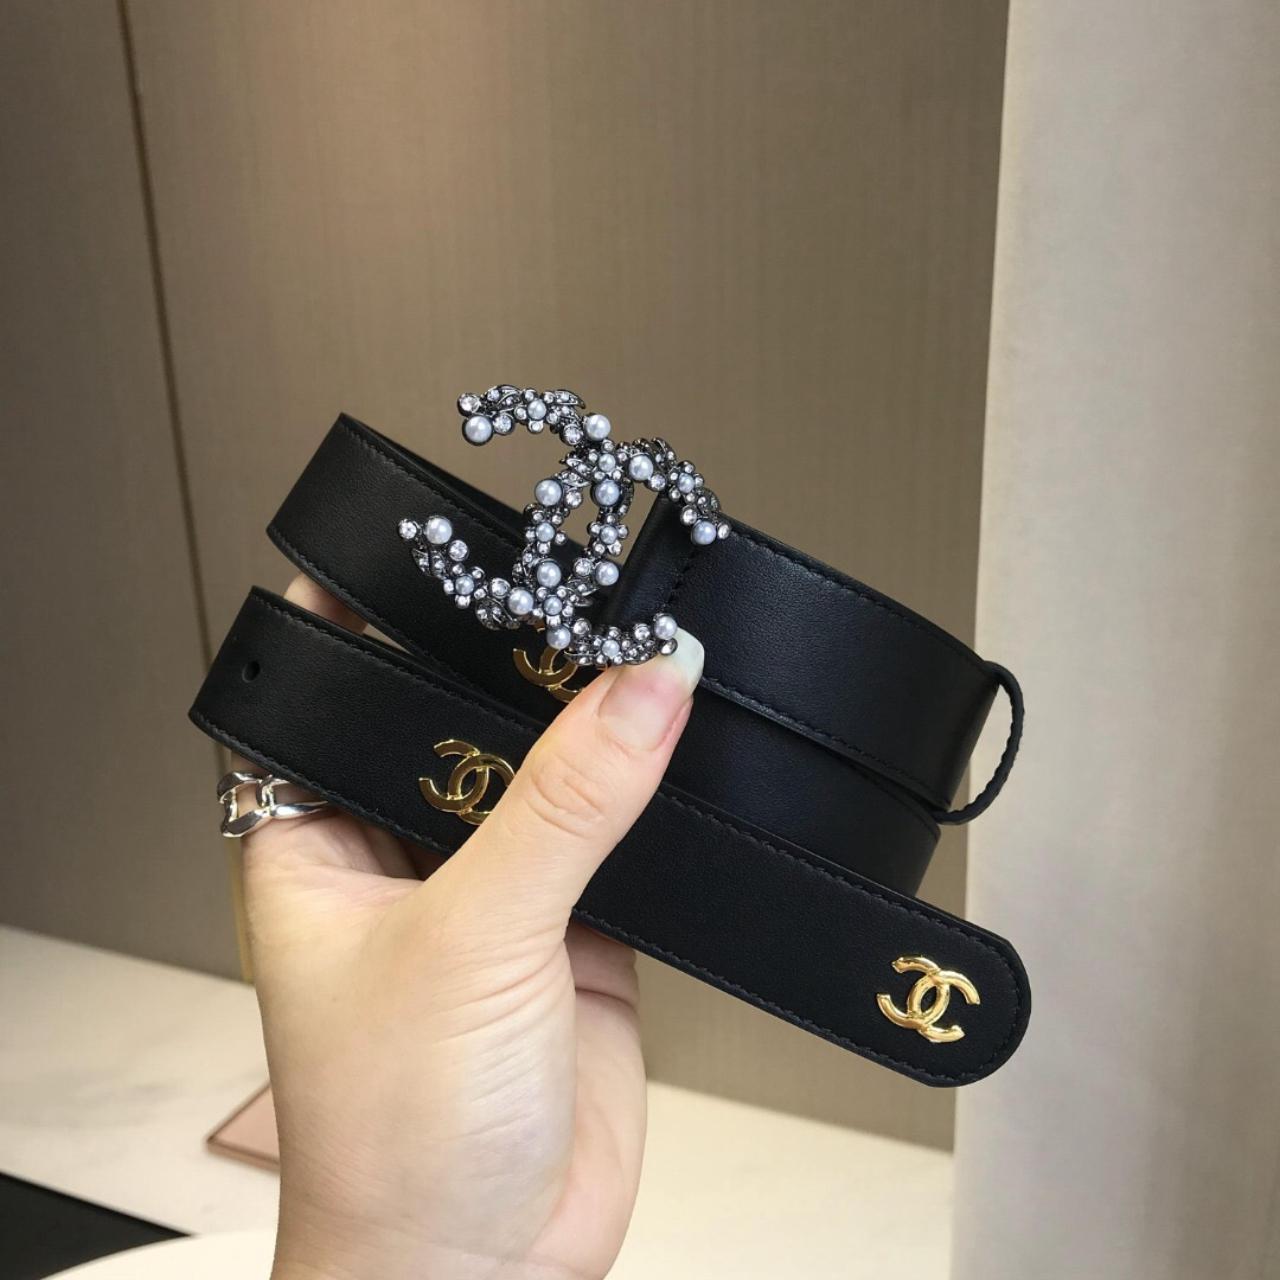 Chanel belt, black pearl buckle, very beautiful